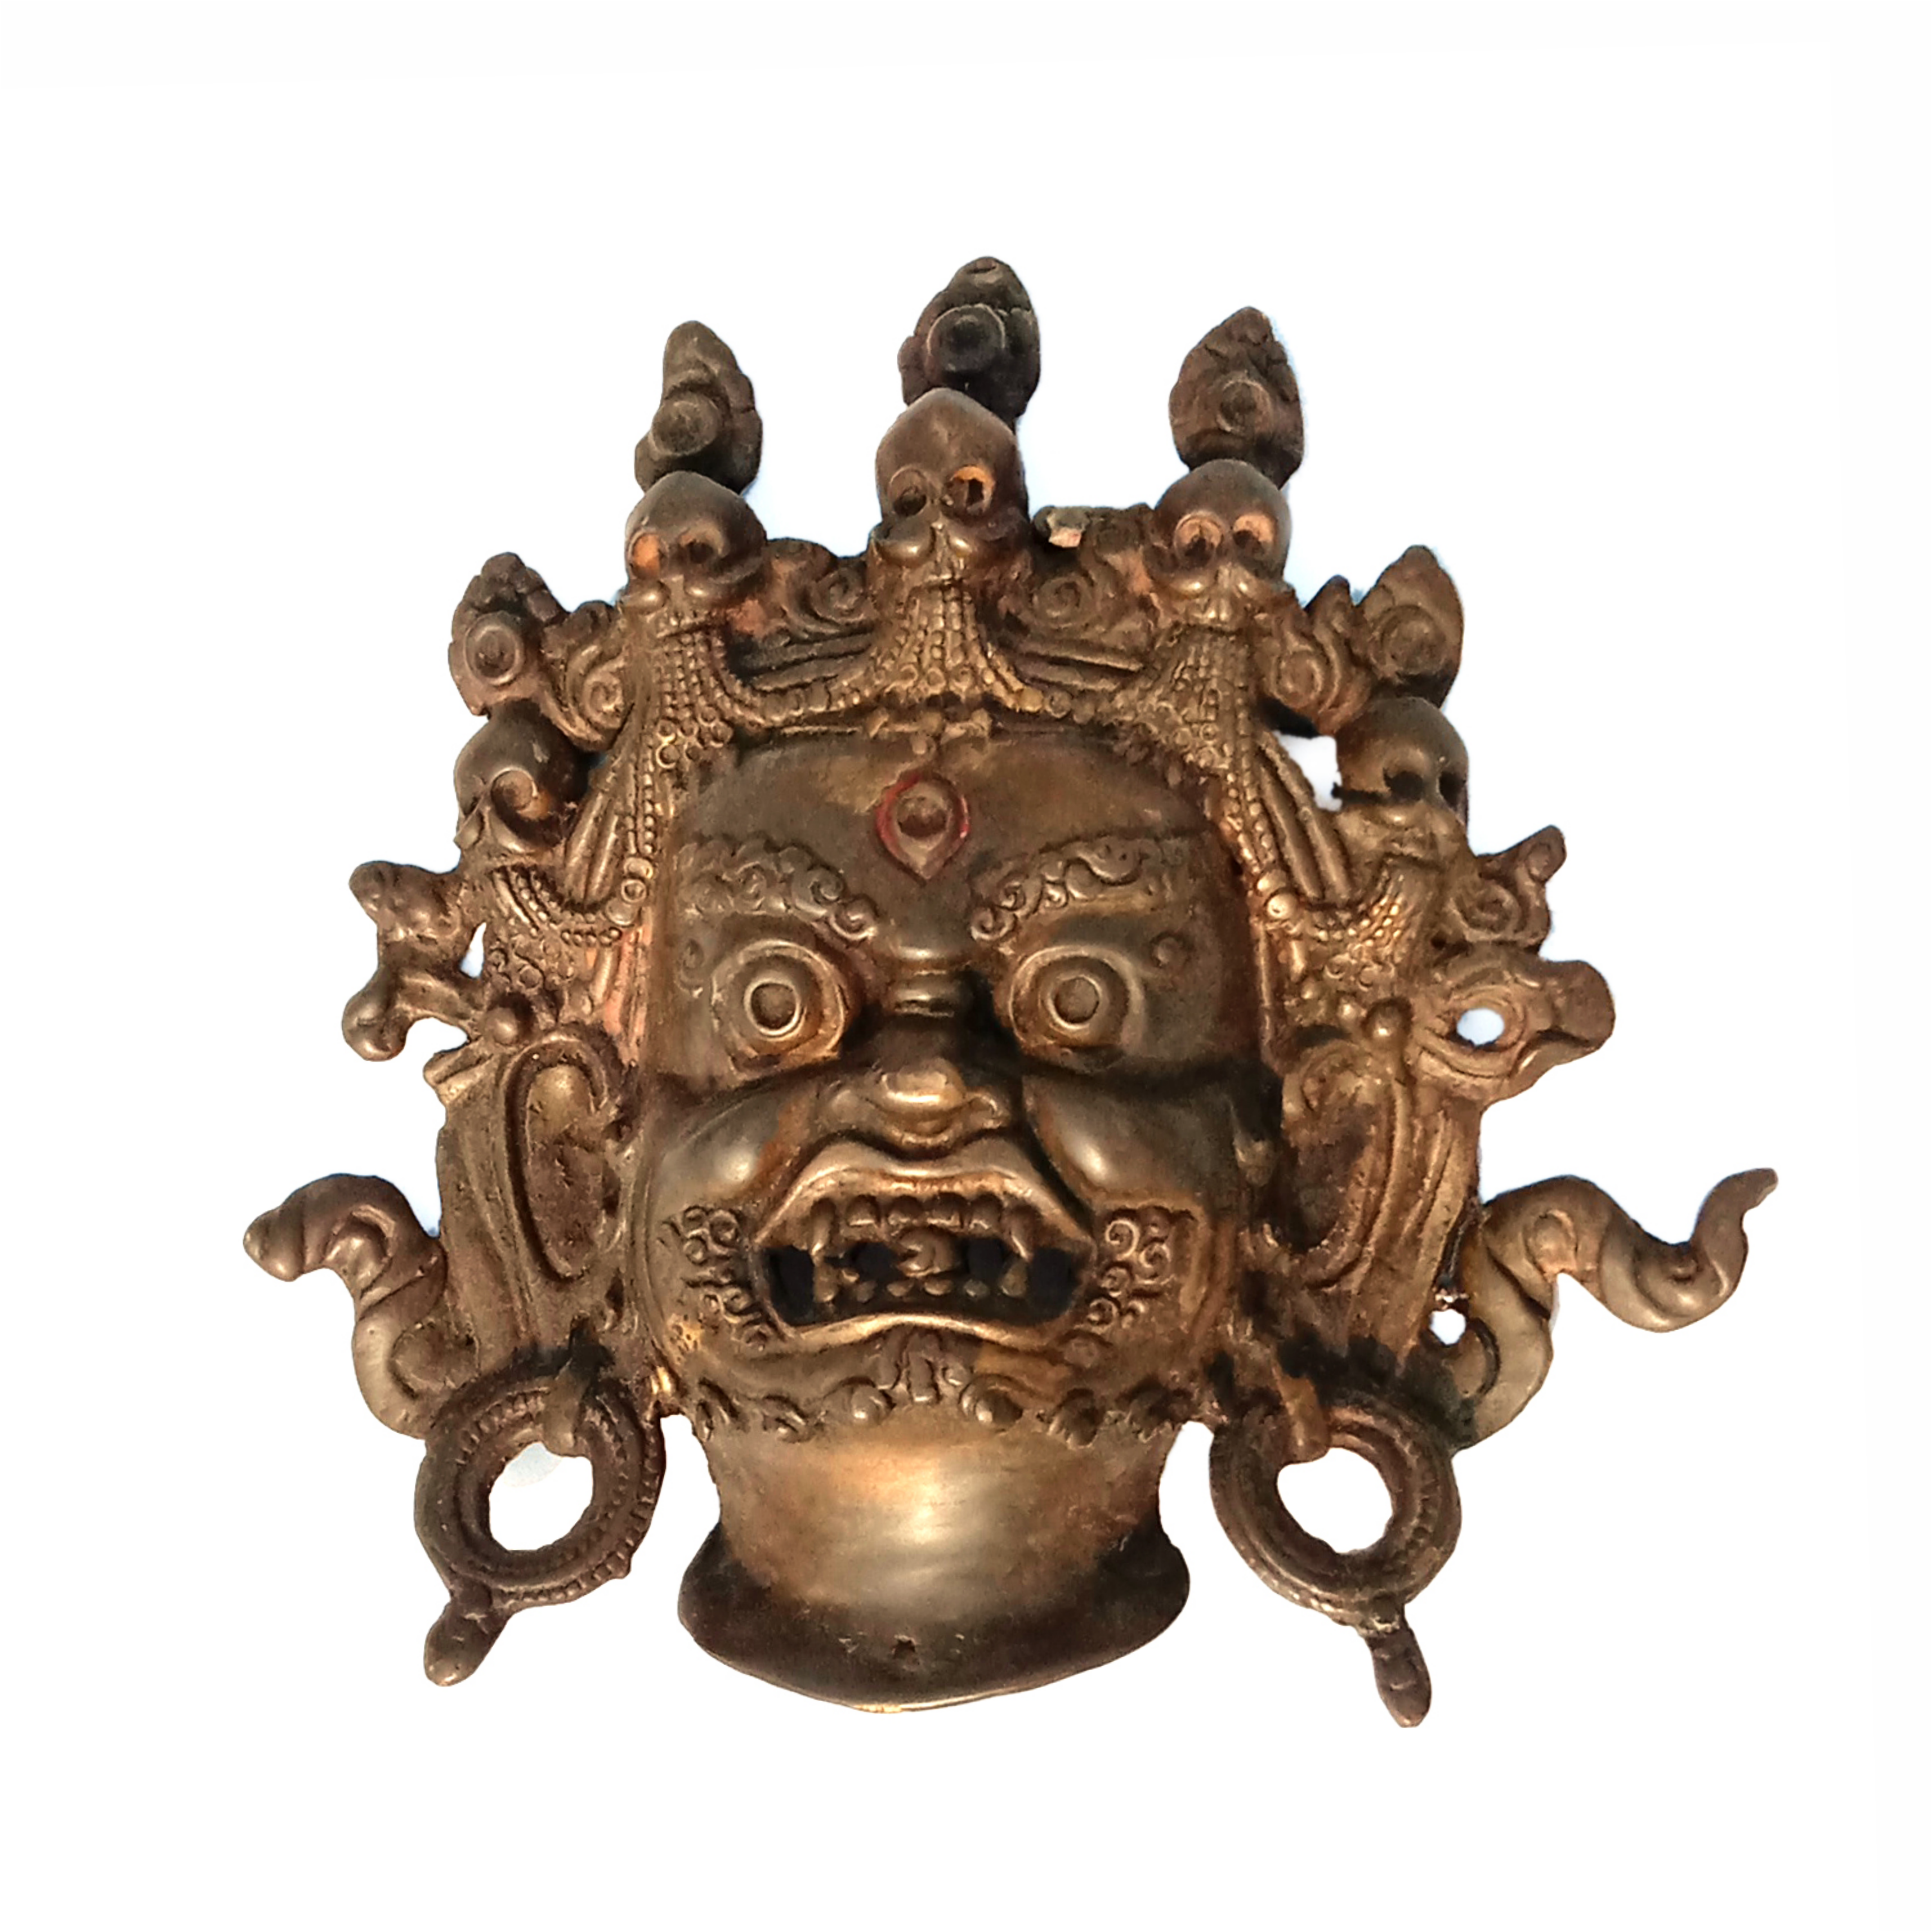 Handcrafted Art Craft Mask Cover Tribal Design Brass metal Mask, wall decoration, masks